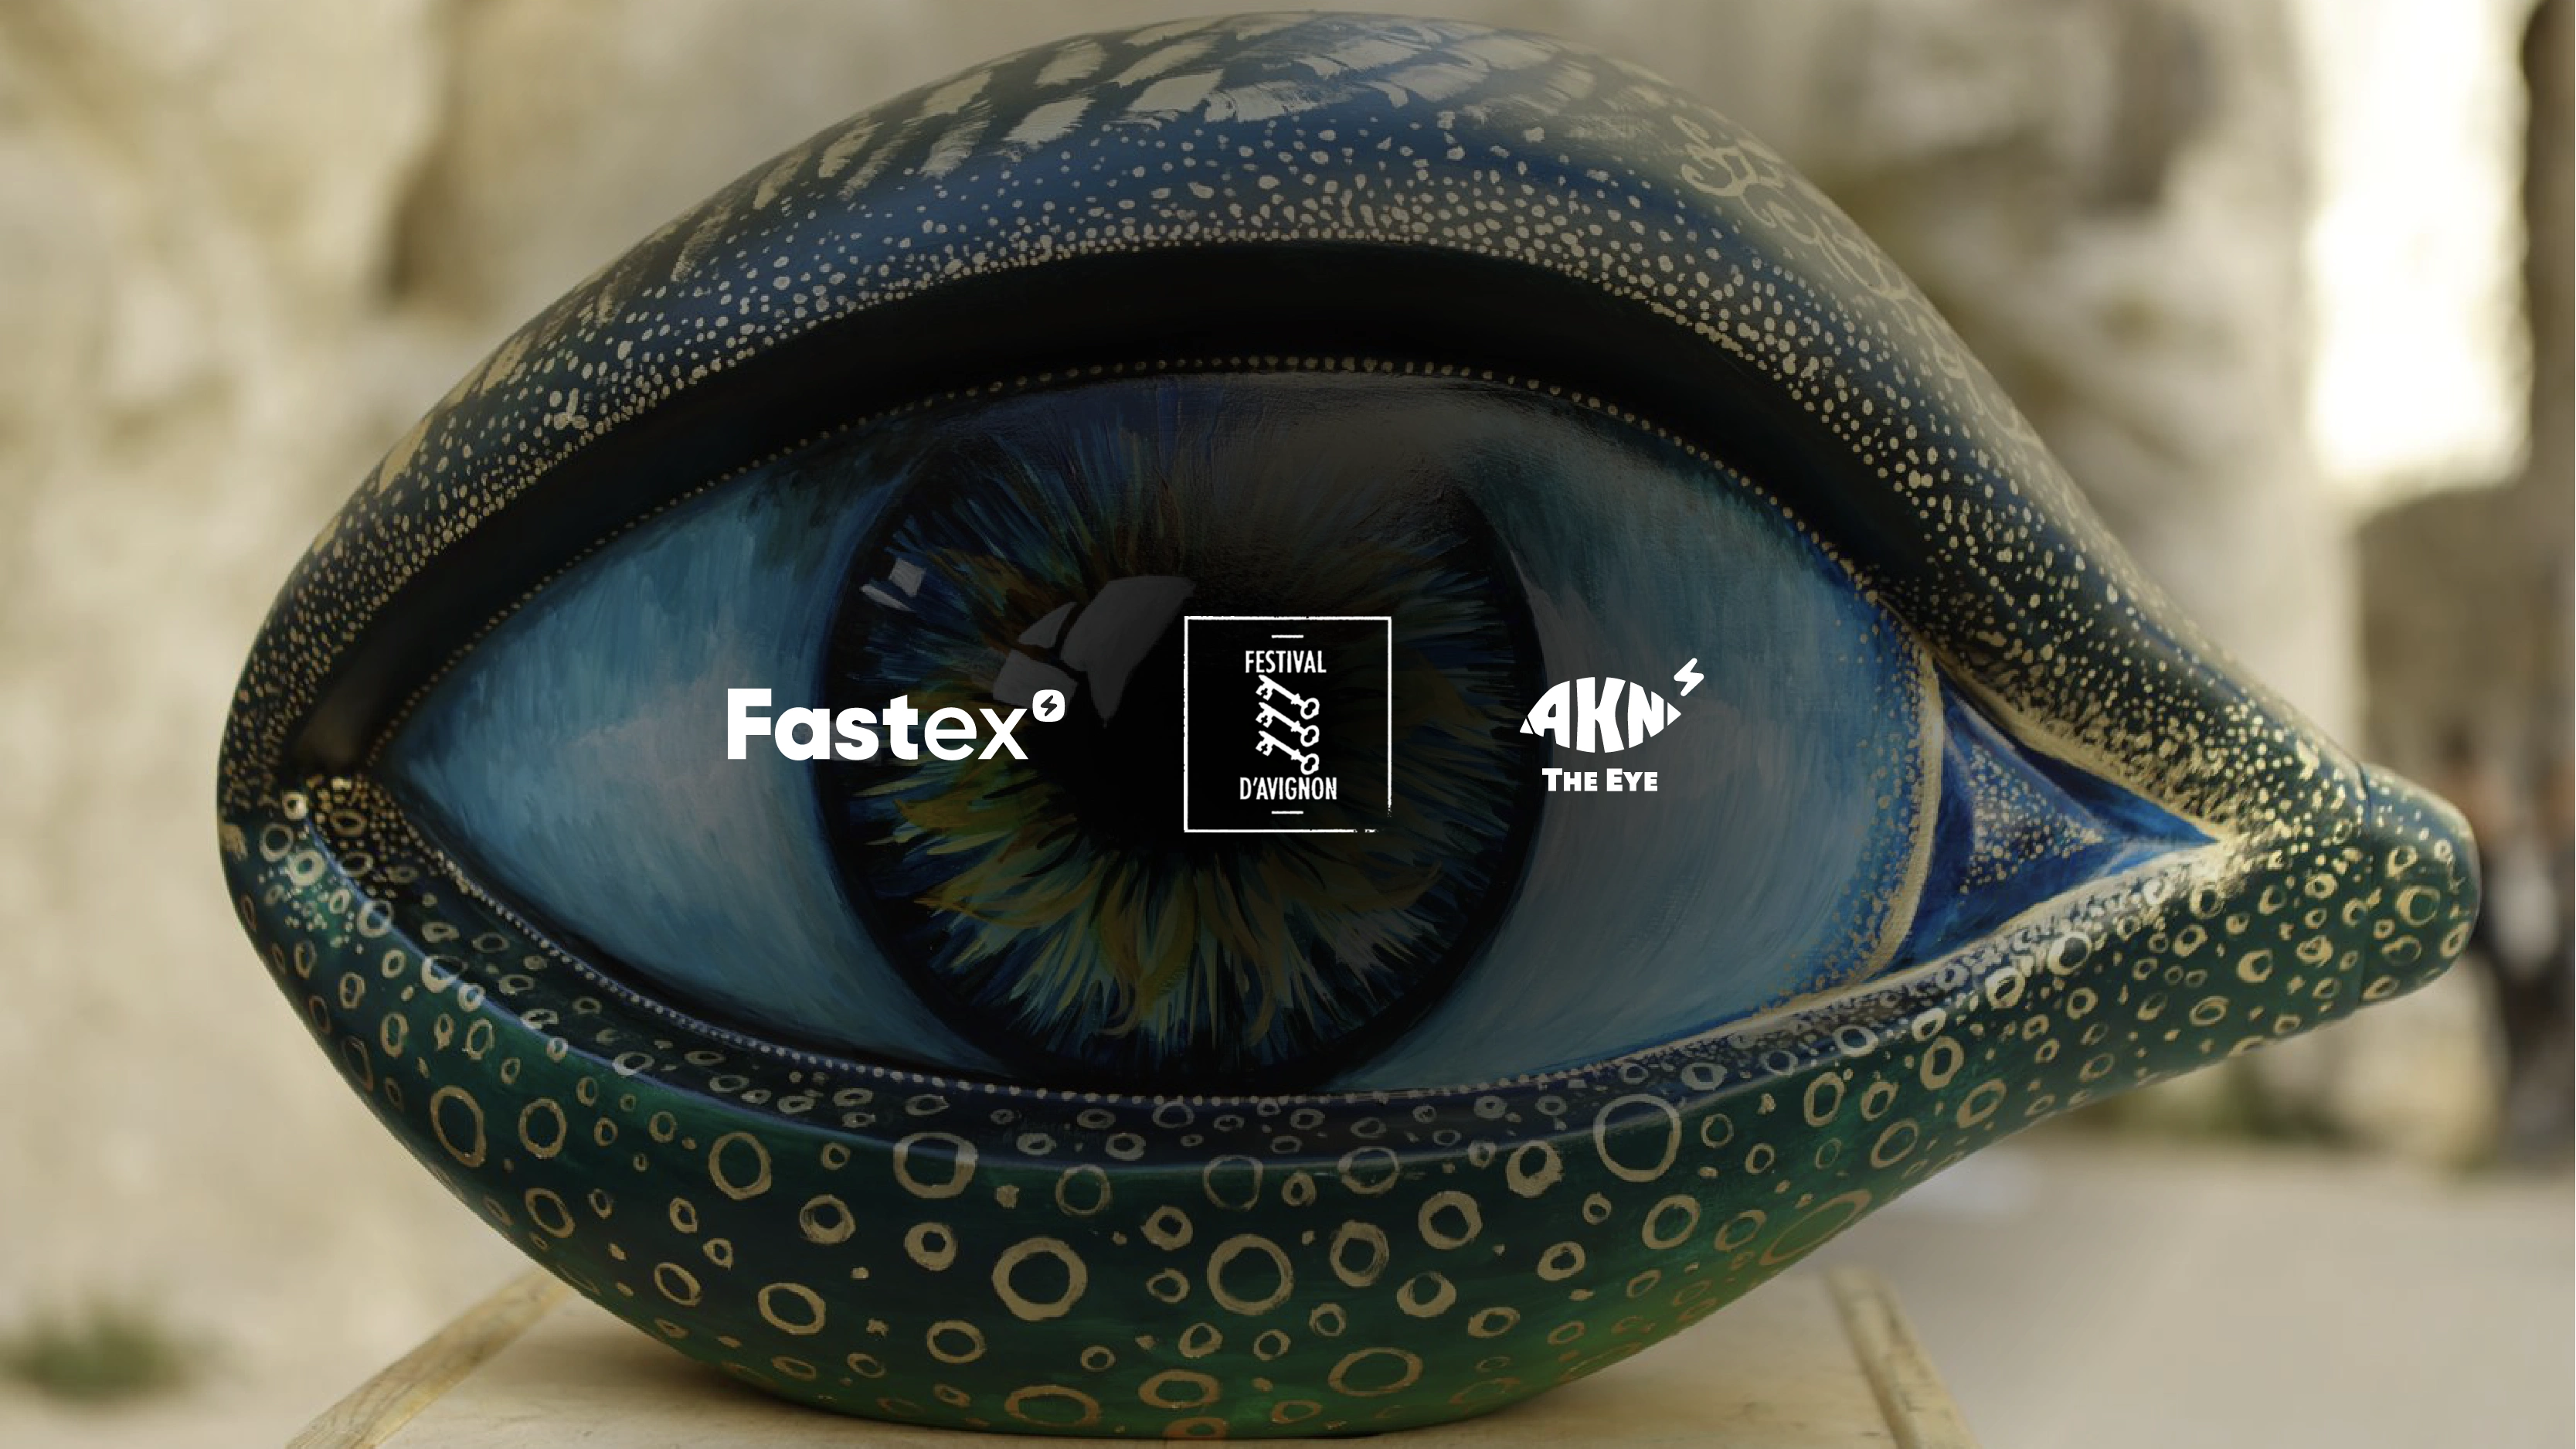 Fastex, Ermenistan'ın Avignon Festivali Katılım Sponsoru